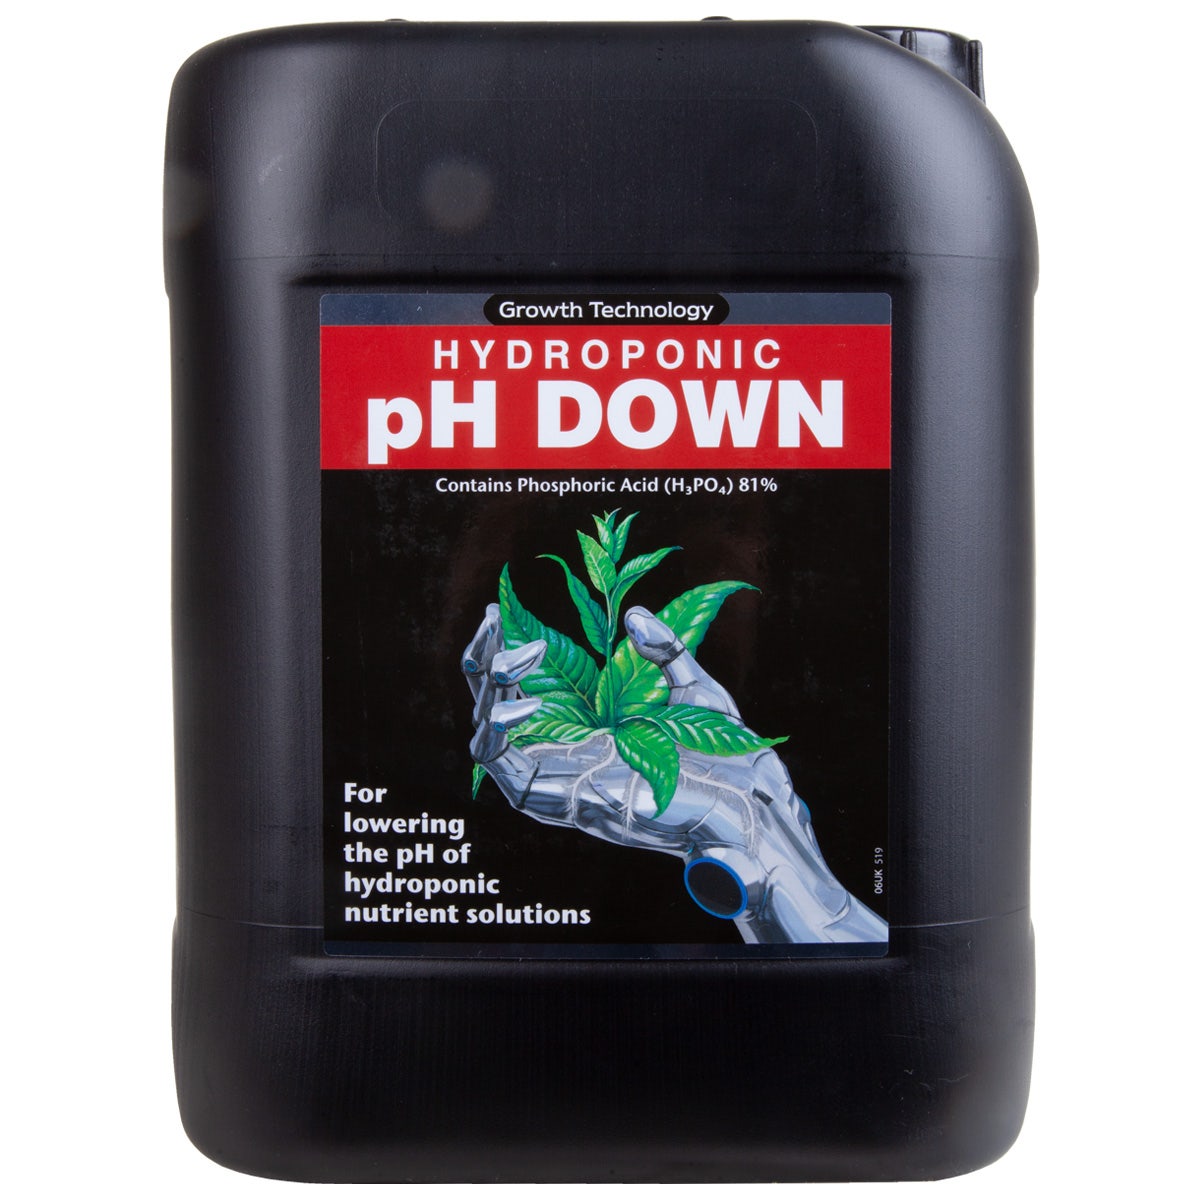 Growth Technology - pH Down